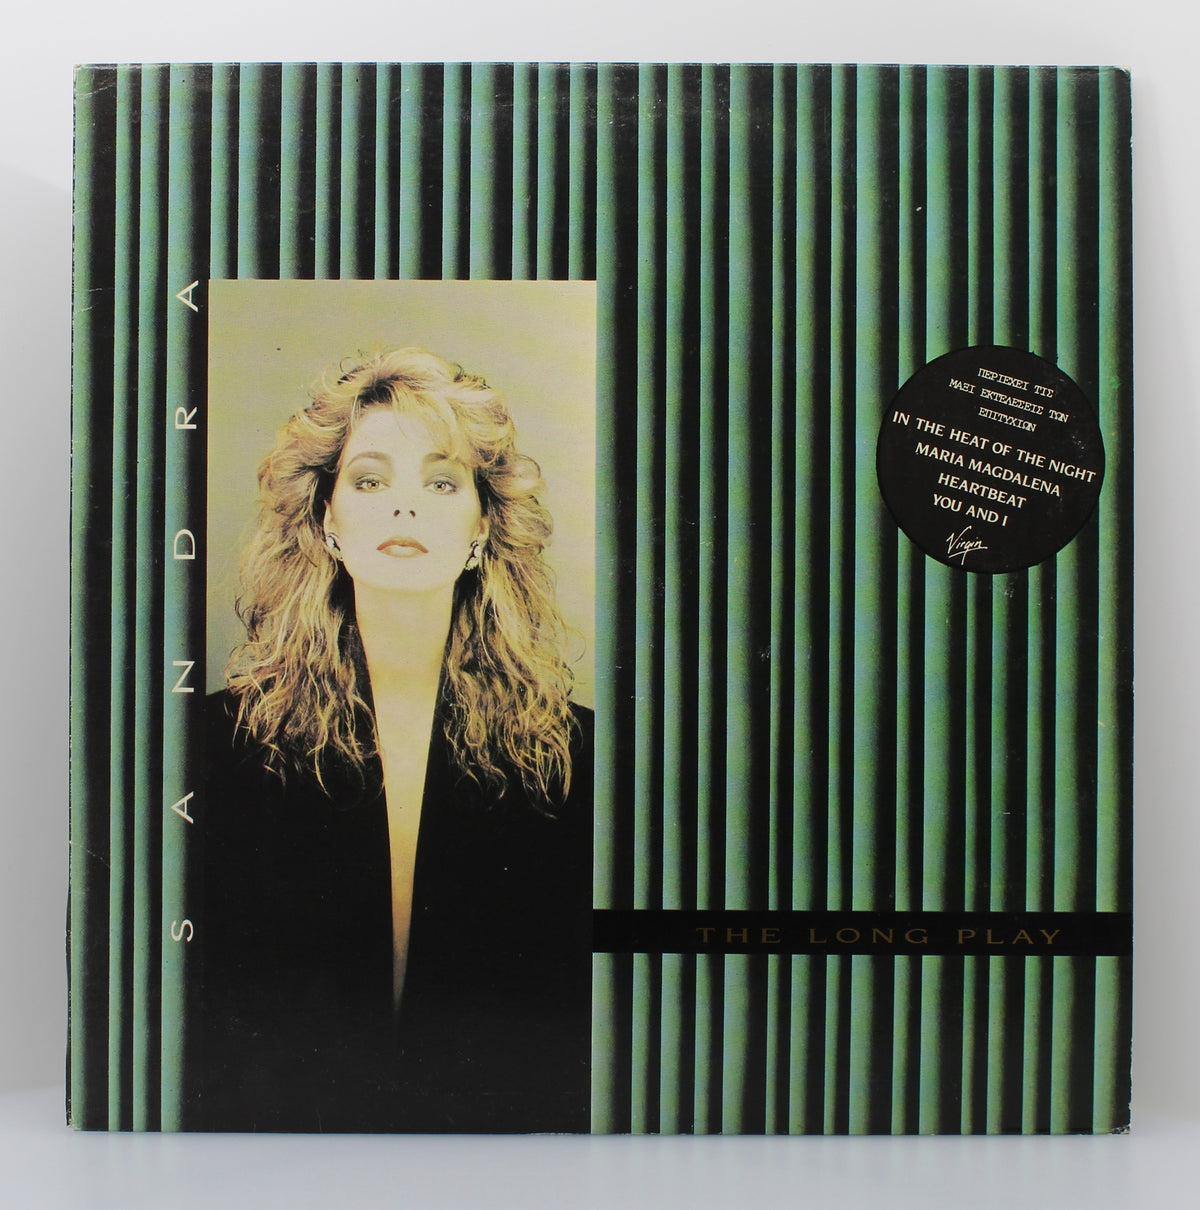 Sandra – The Long Play, Vinyl, LP, Album, VG+/VG+, Greece 1985